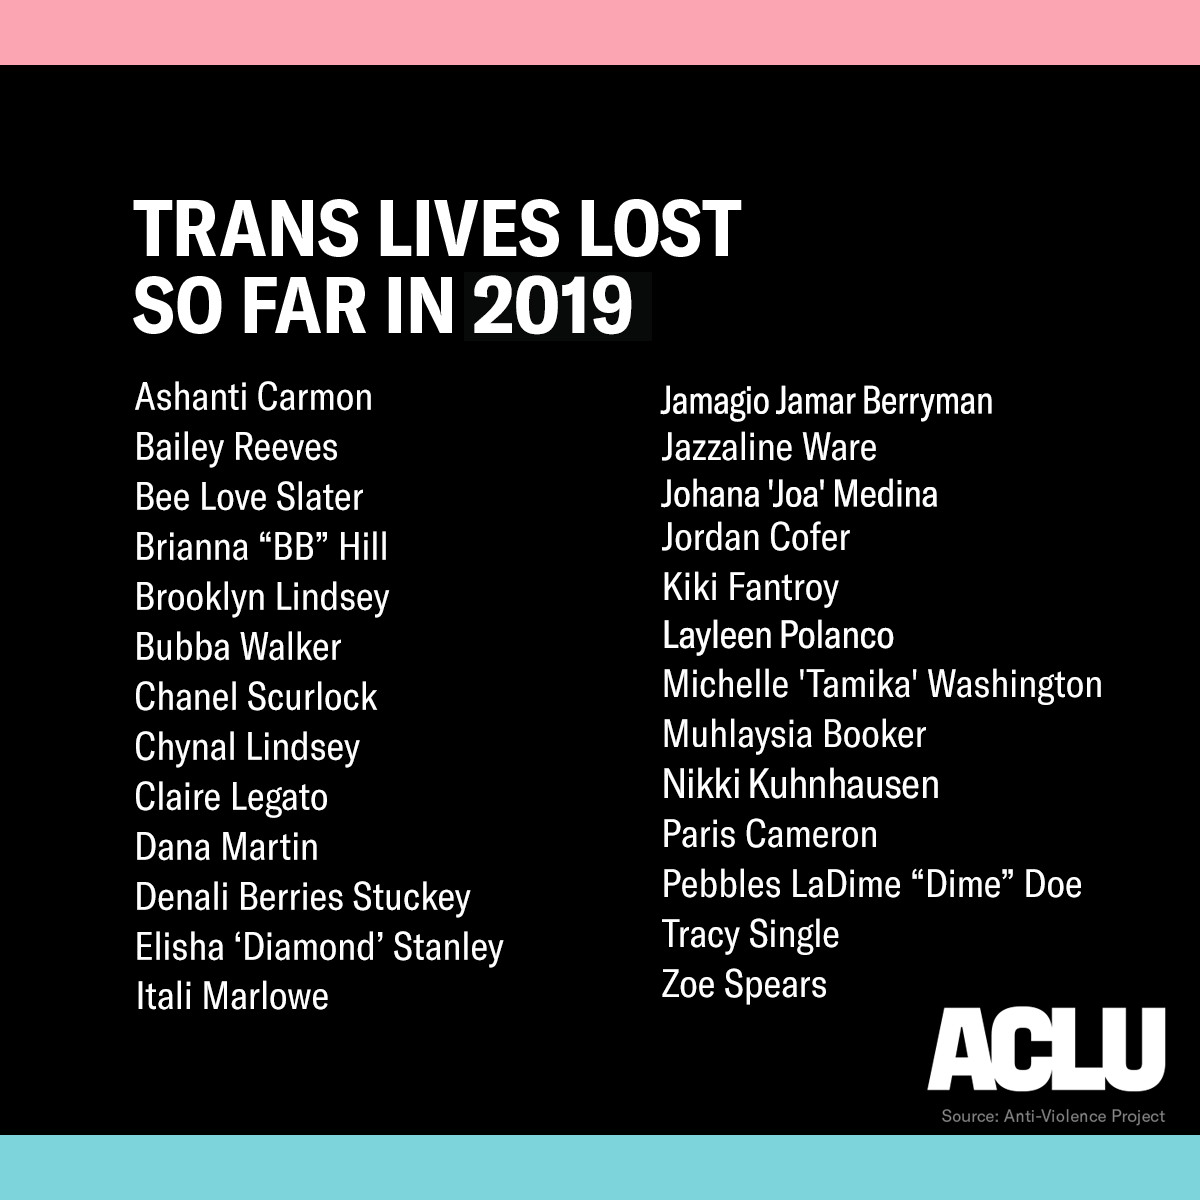 Trans lives lost so far in 2019